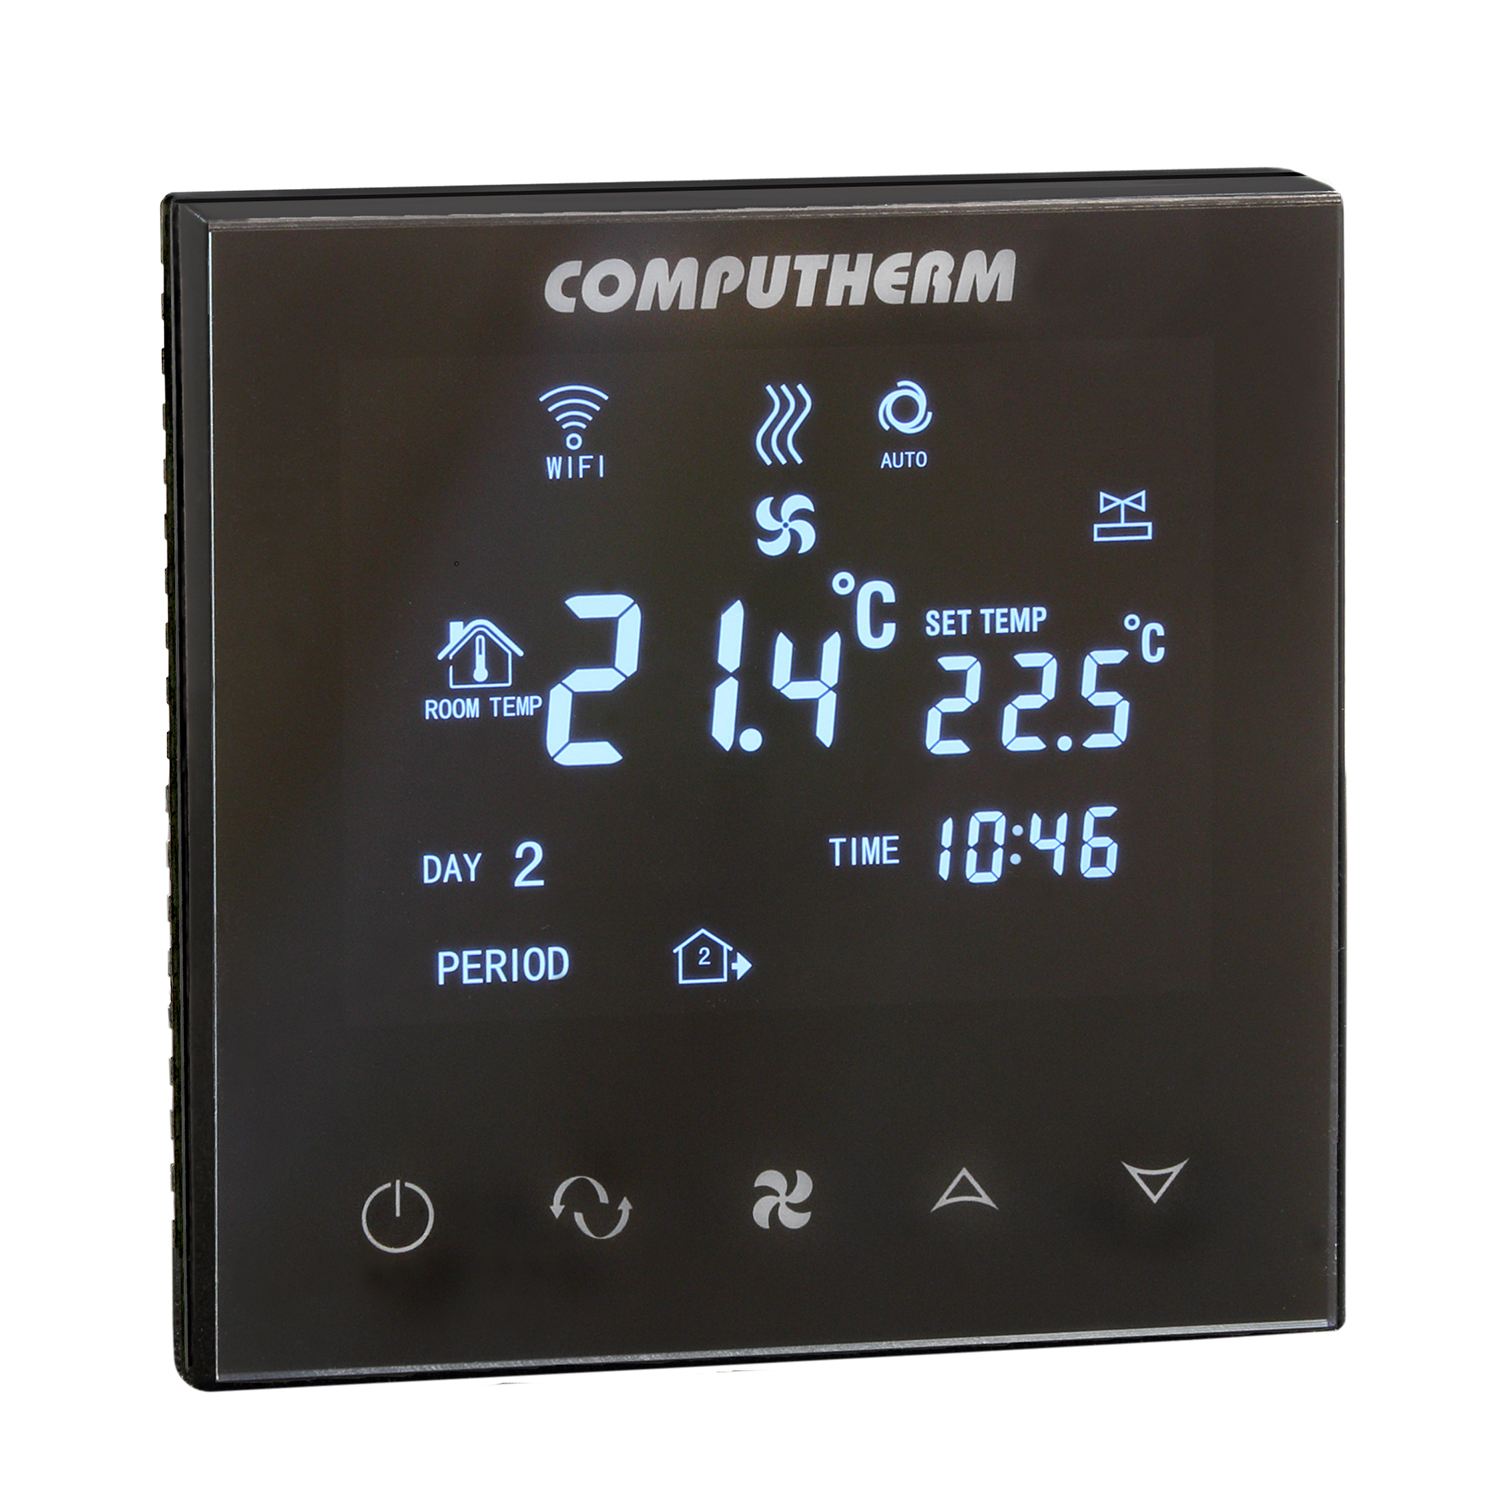 Computherm - Wi-fi termosztátok -  COMPUTHERM E300FC - Quantrax Kft. 